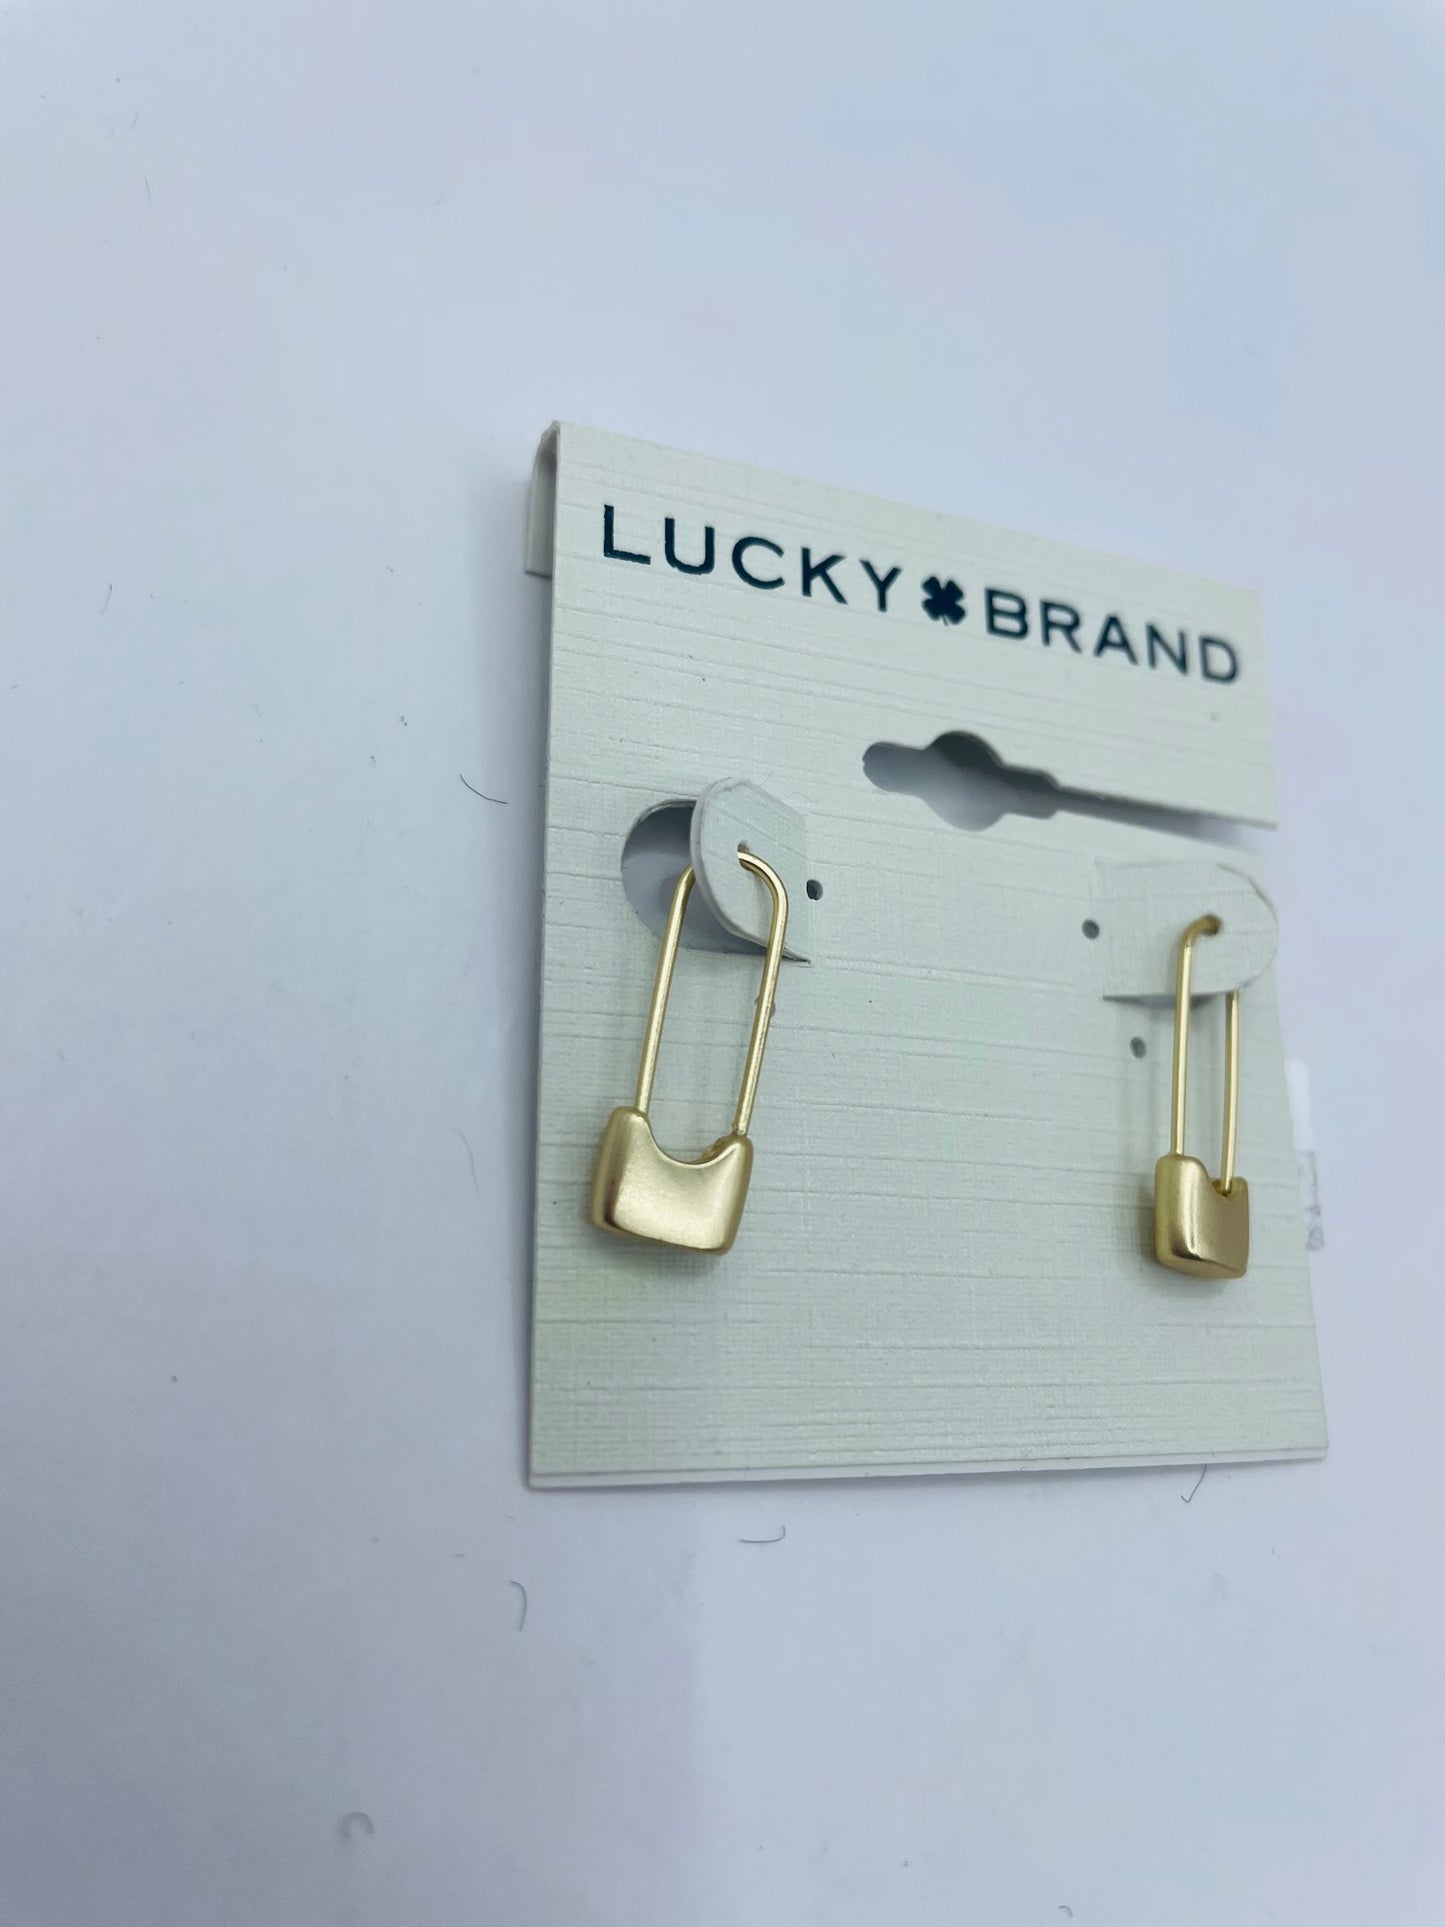 Lucky brand earring